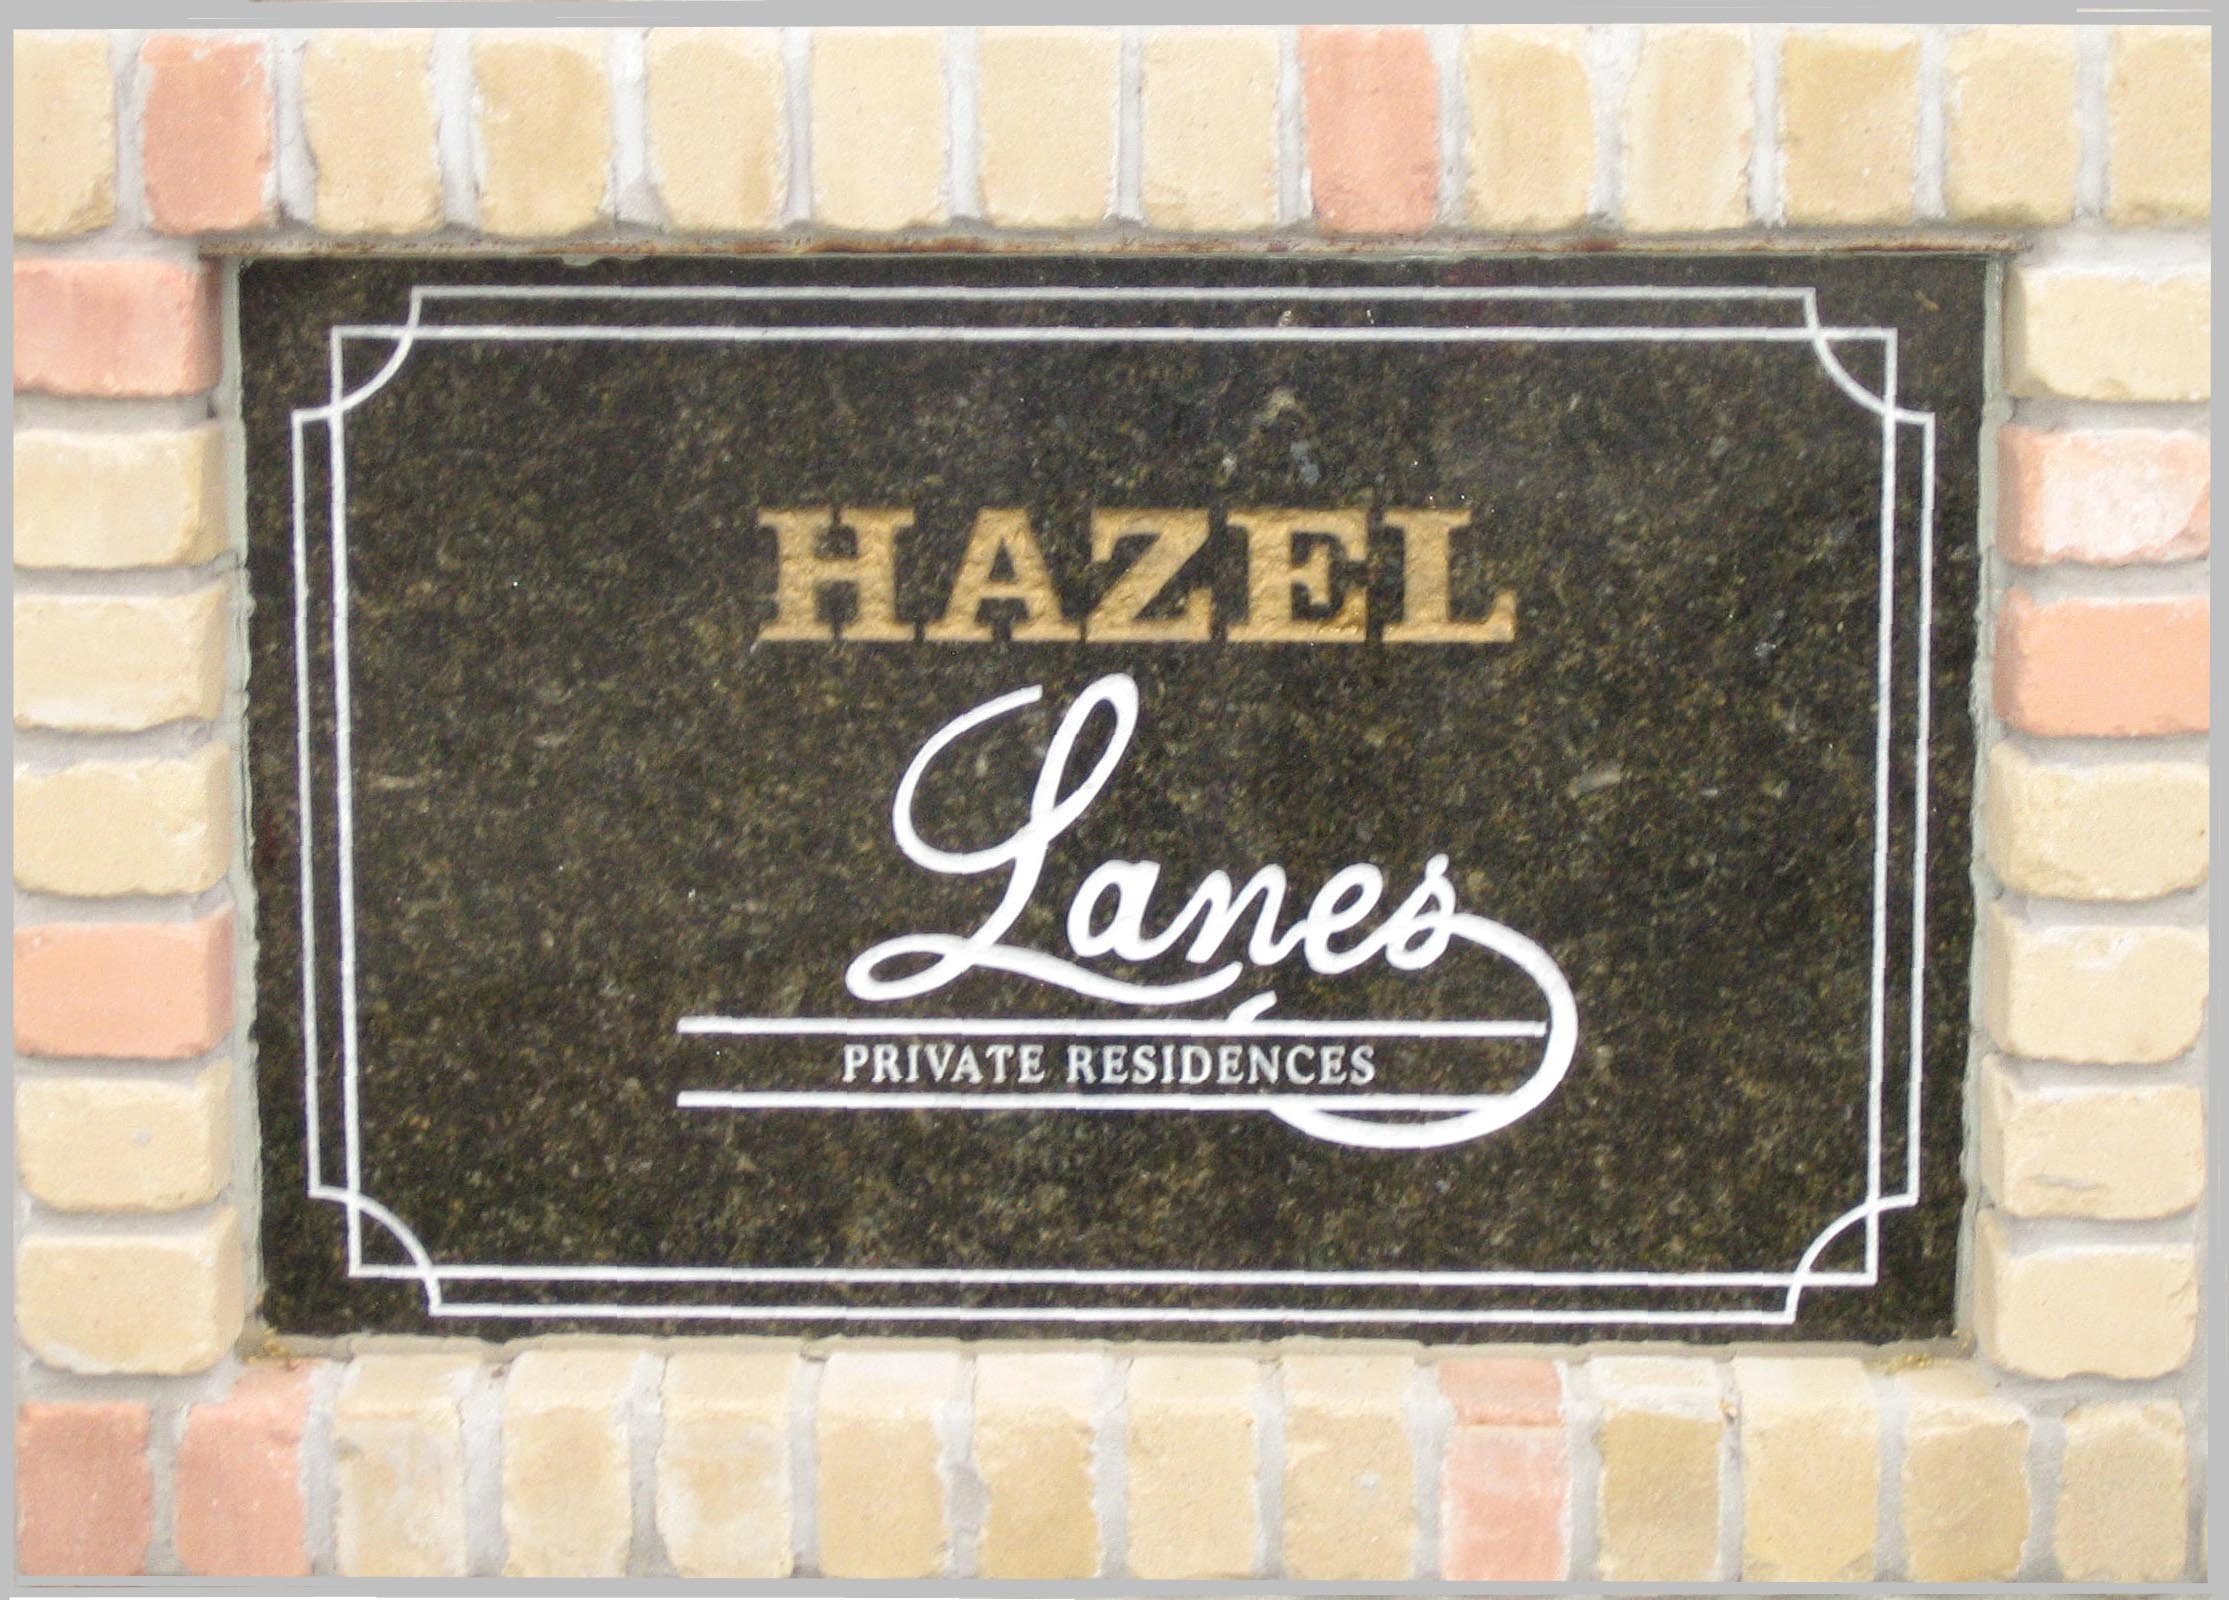 Hazel Lanes